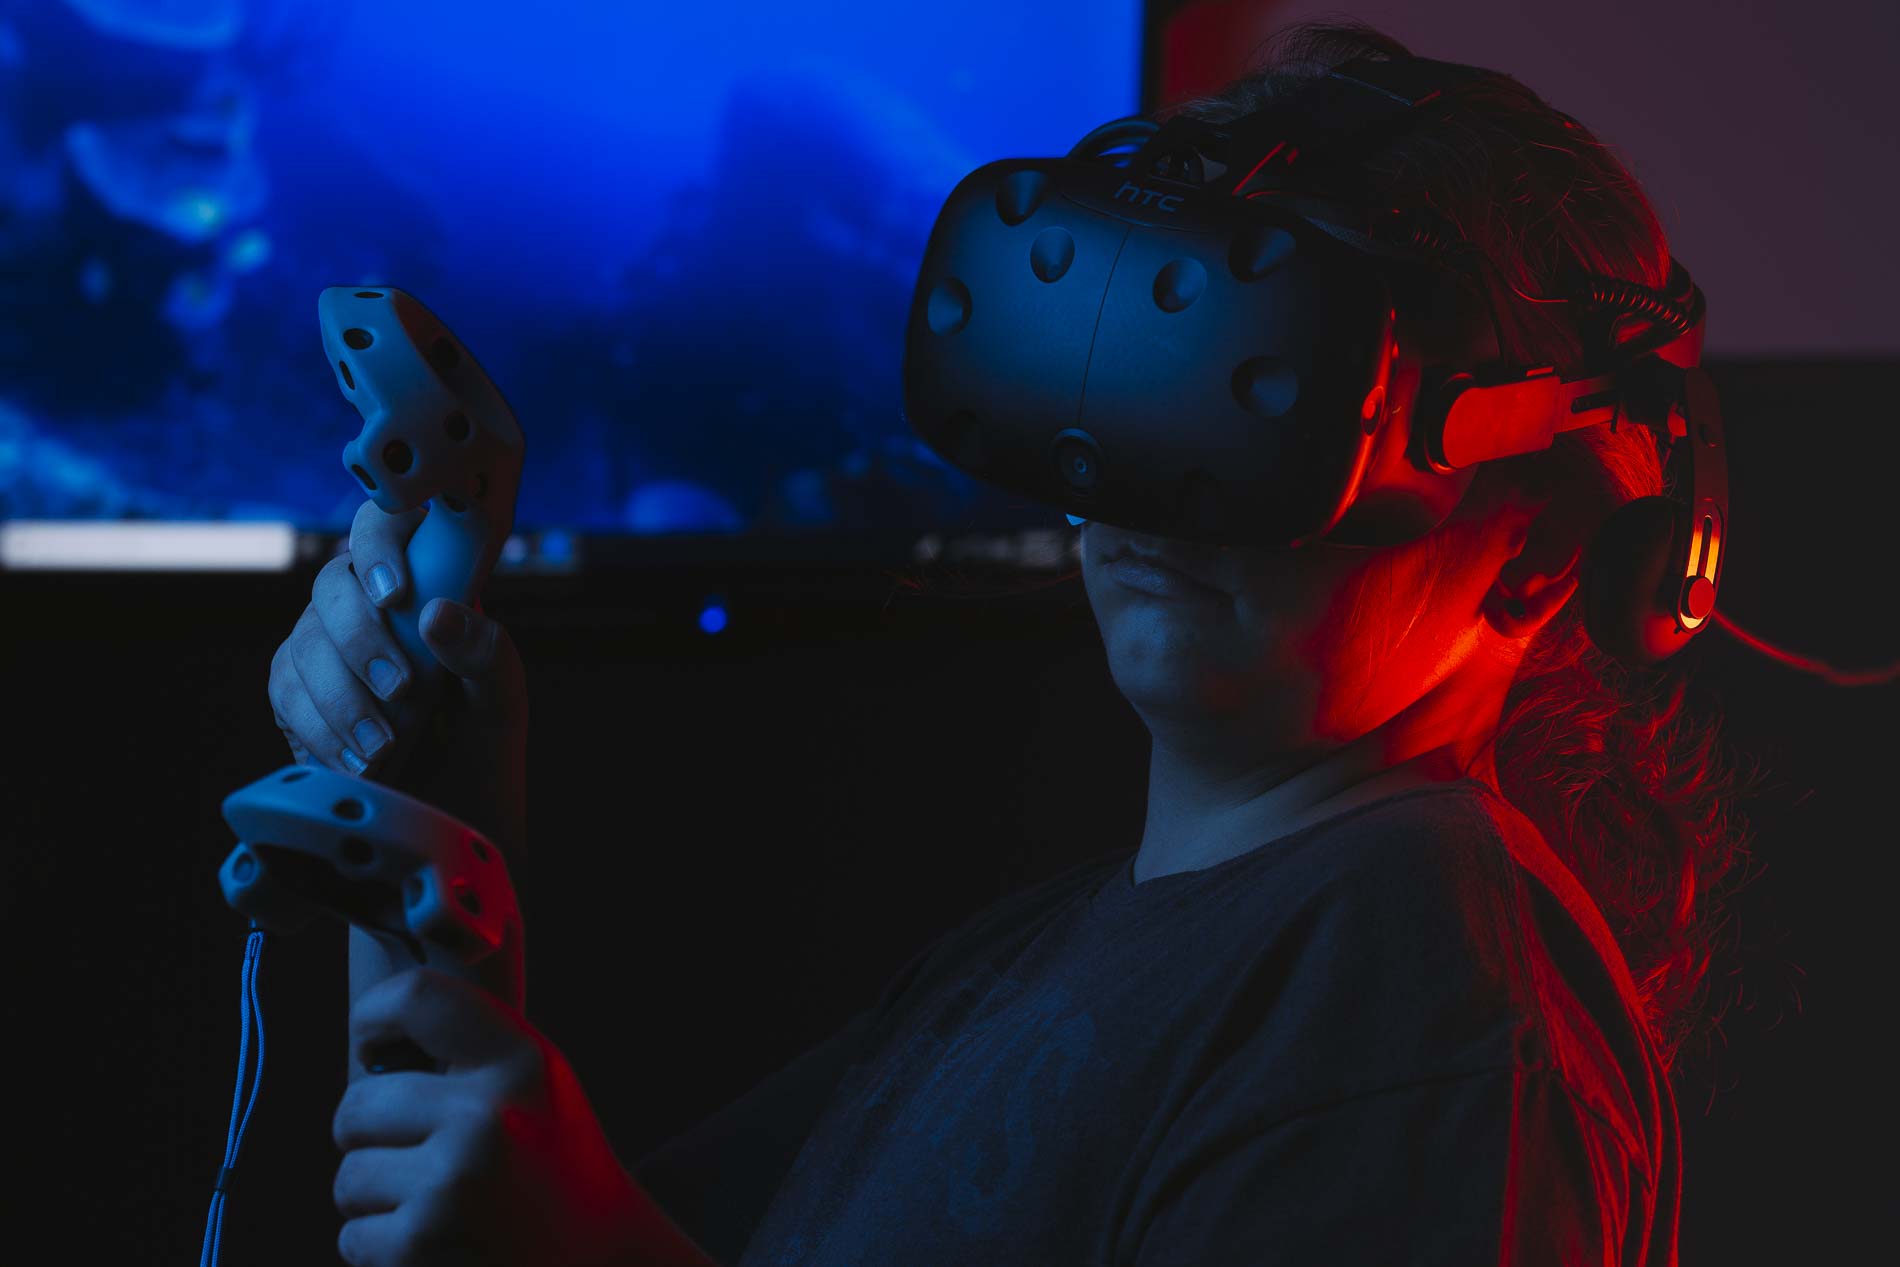  A Bluff City Virtual Reality employee uses reality augmentation equipment at the Cordova location. (Ziggy Mack)